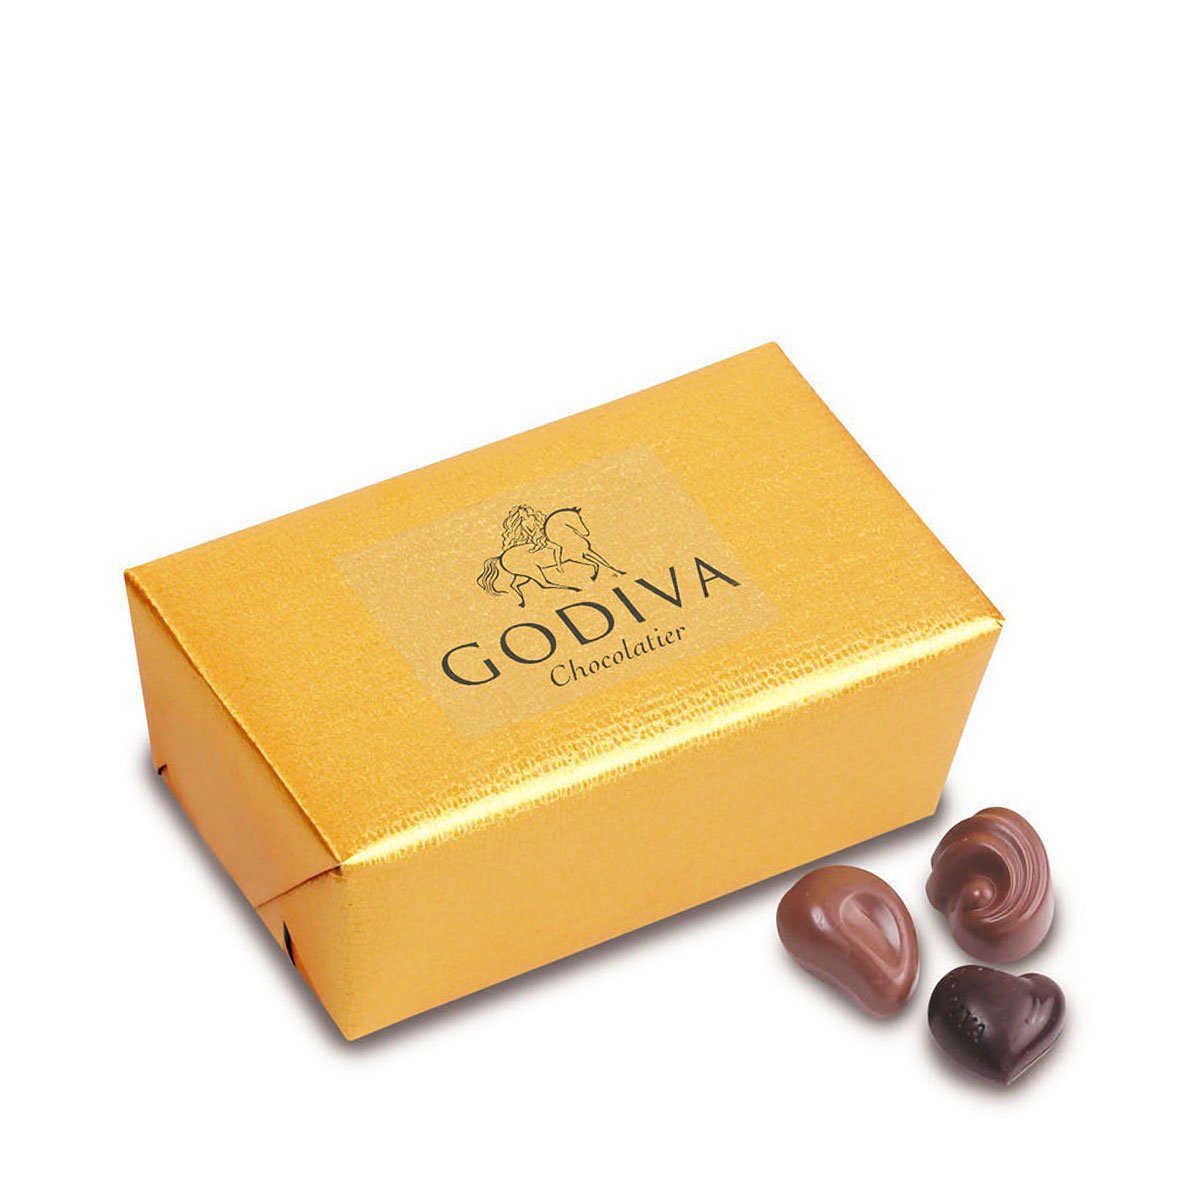 Godiva Christmas Gold Gift Box Chocolates at the Office